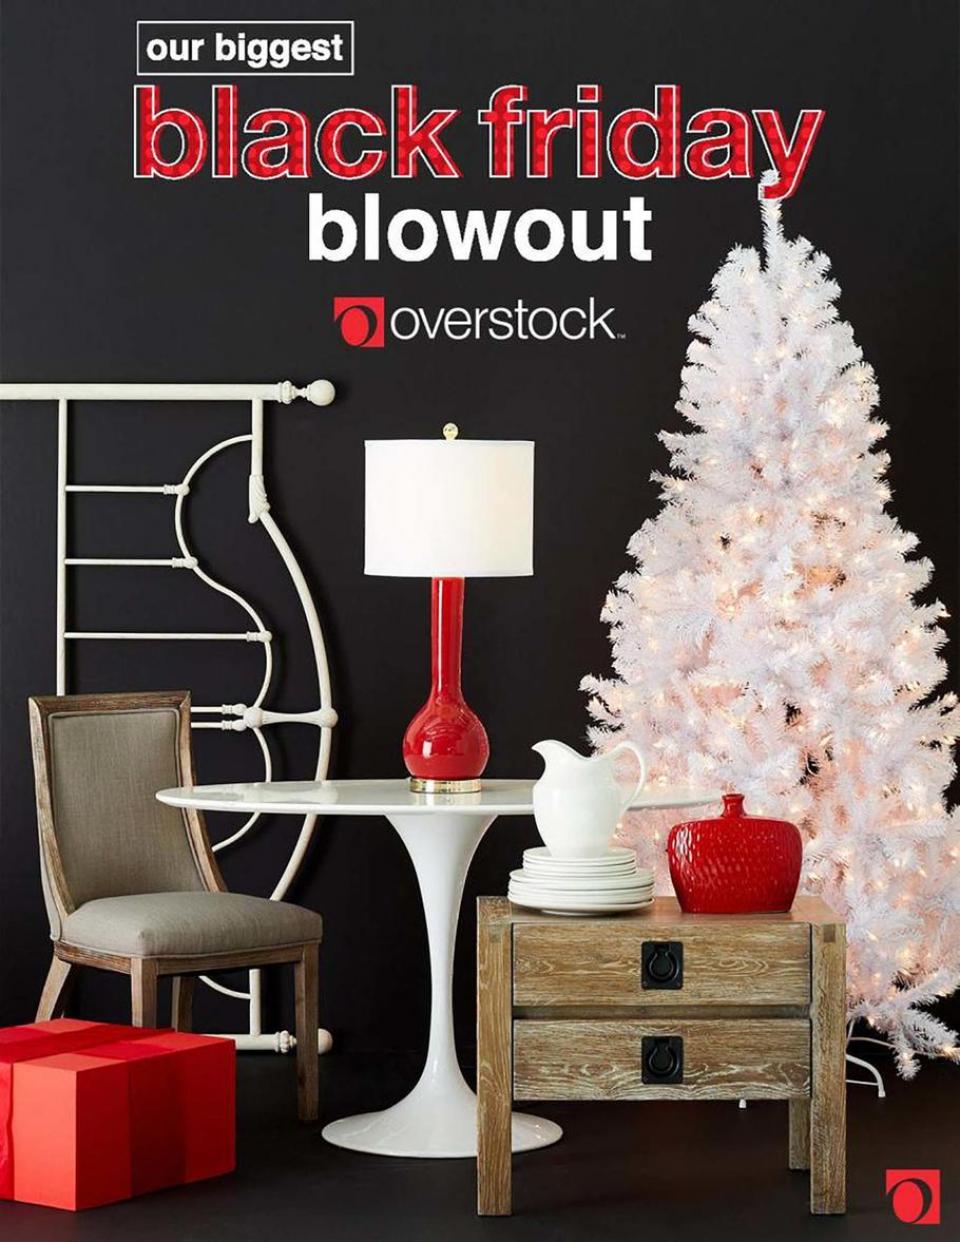 Overstock black friday ad